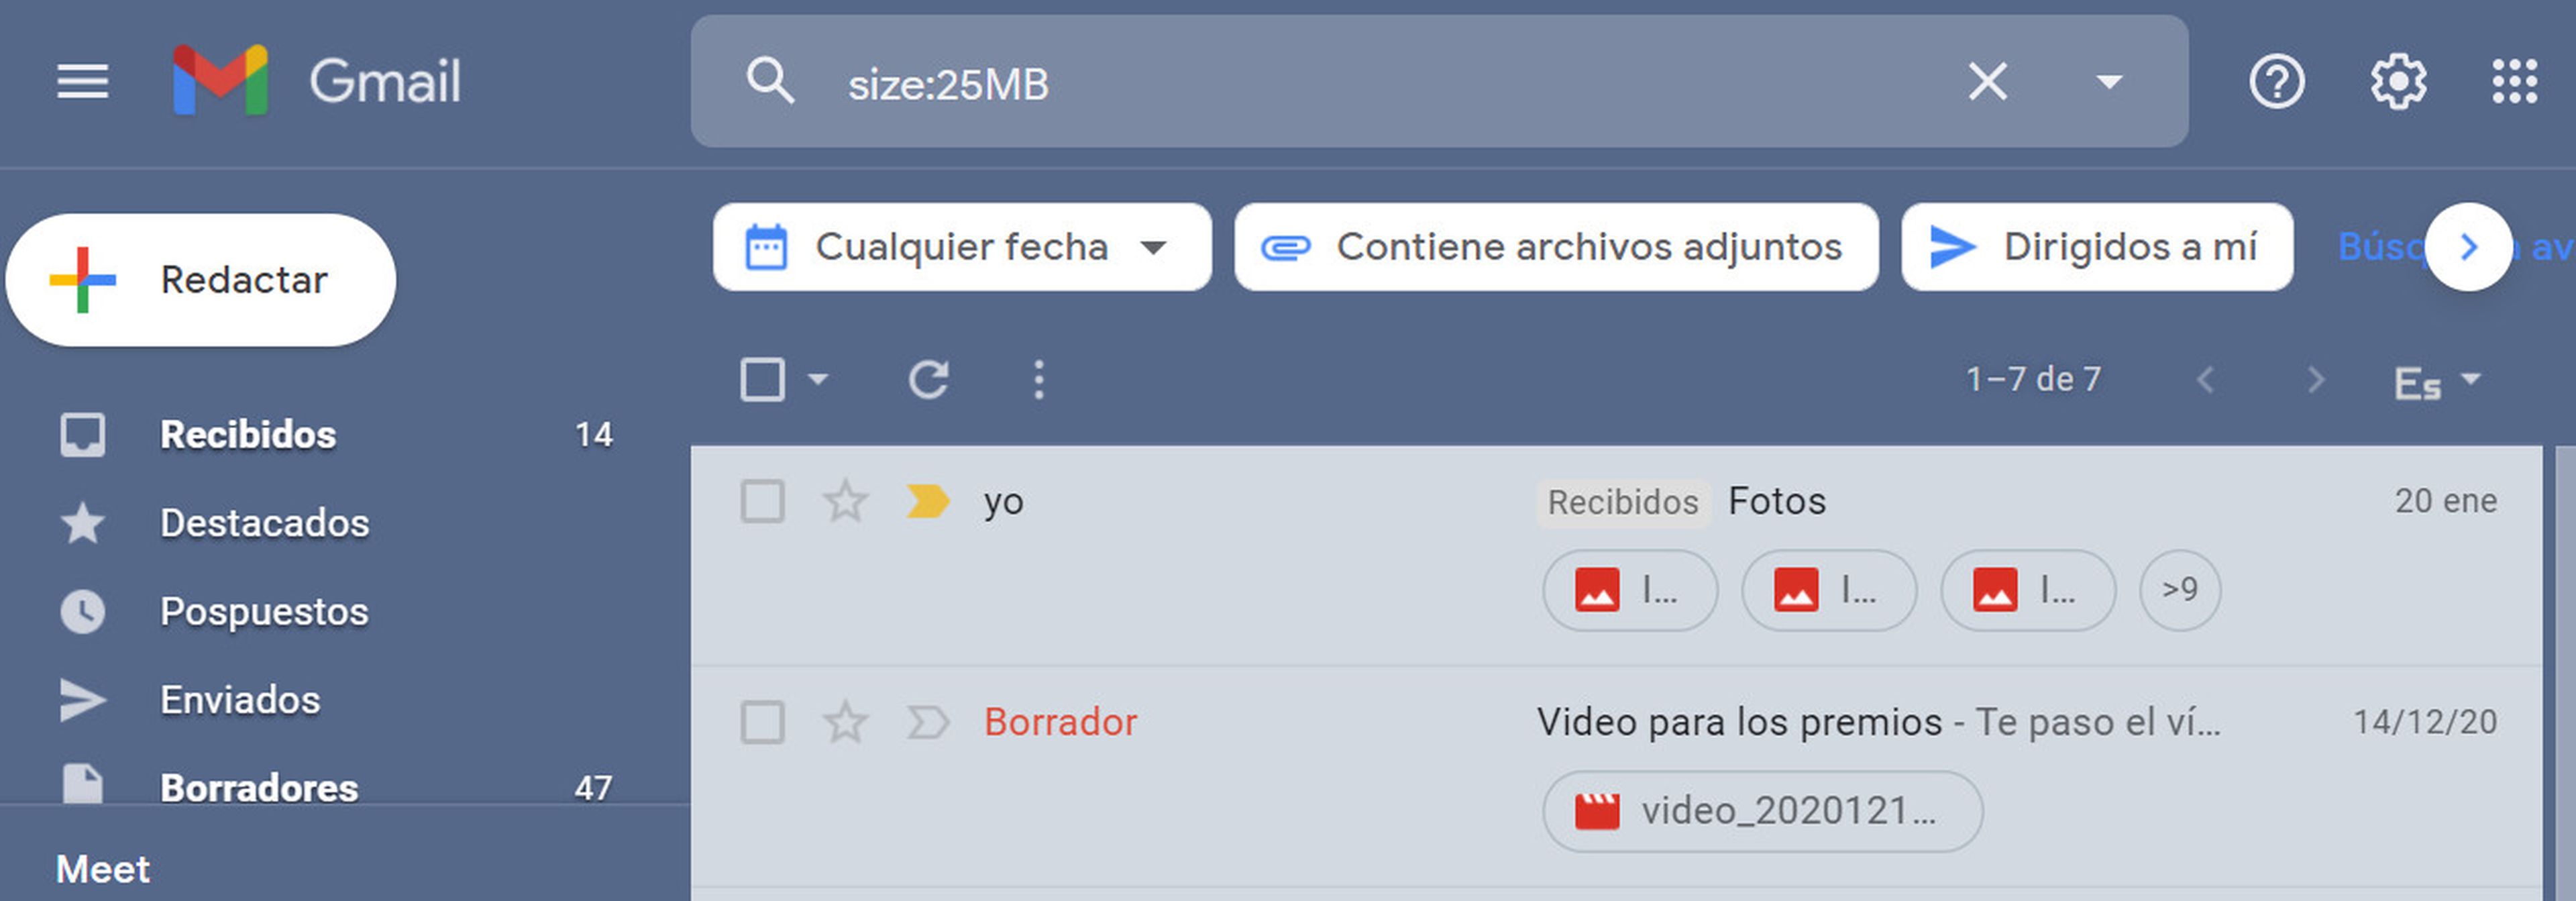 Correo Gmail tutorial